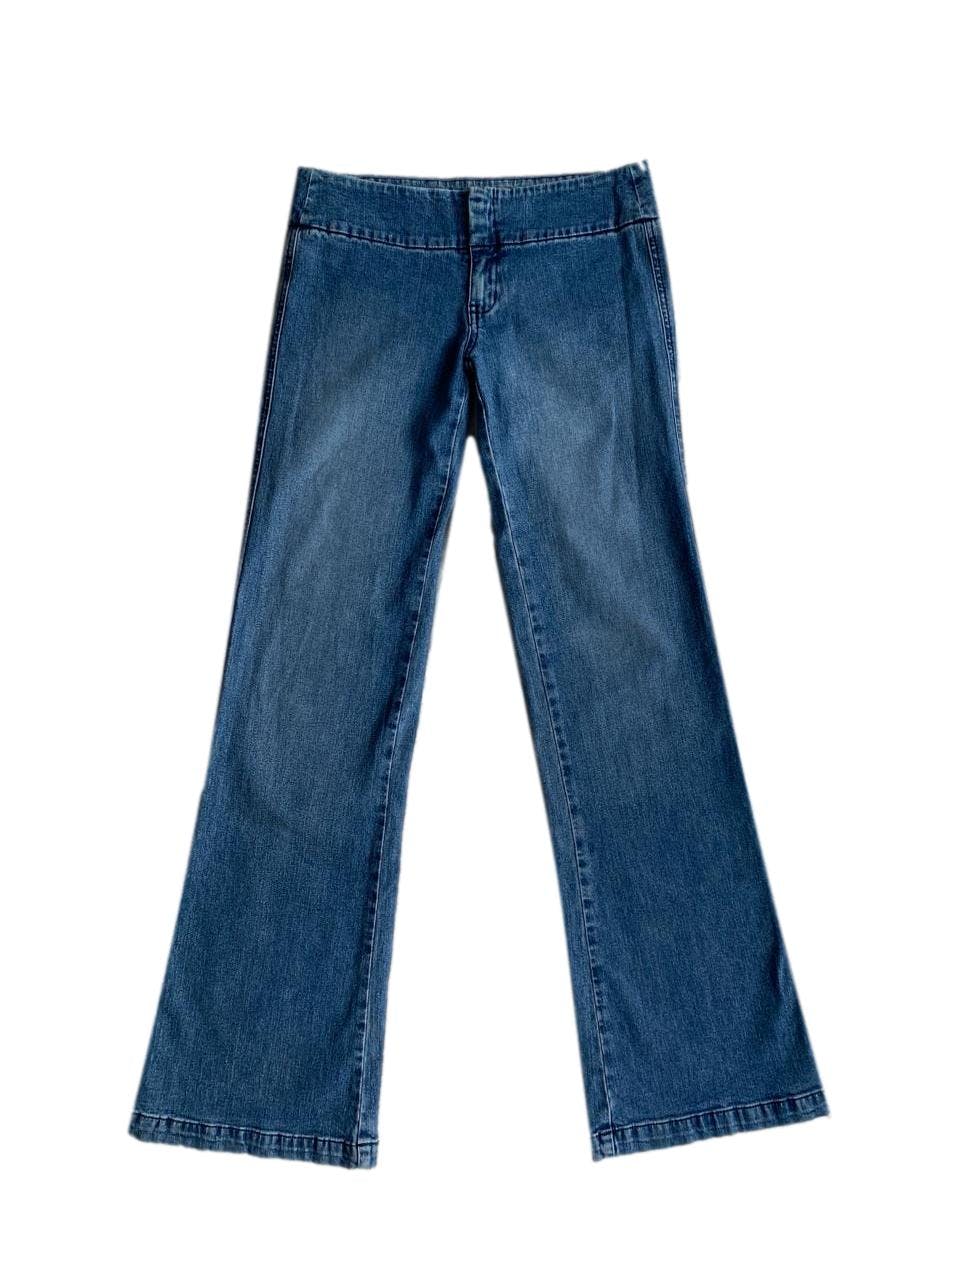 Flare jeans Kids Made Here sin bolsillo. Cintura: 72cm, largo: 100cm. 